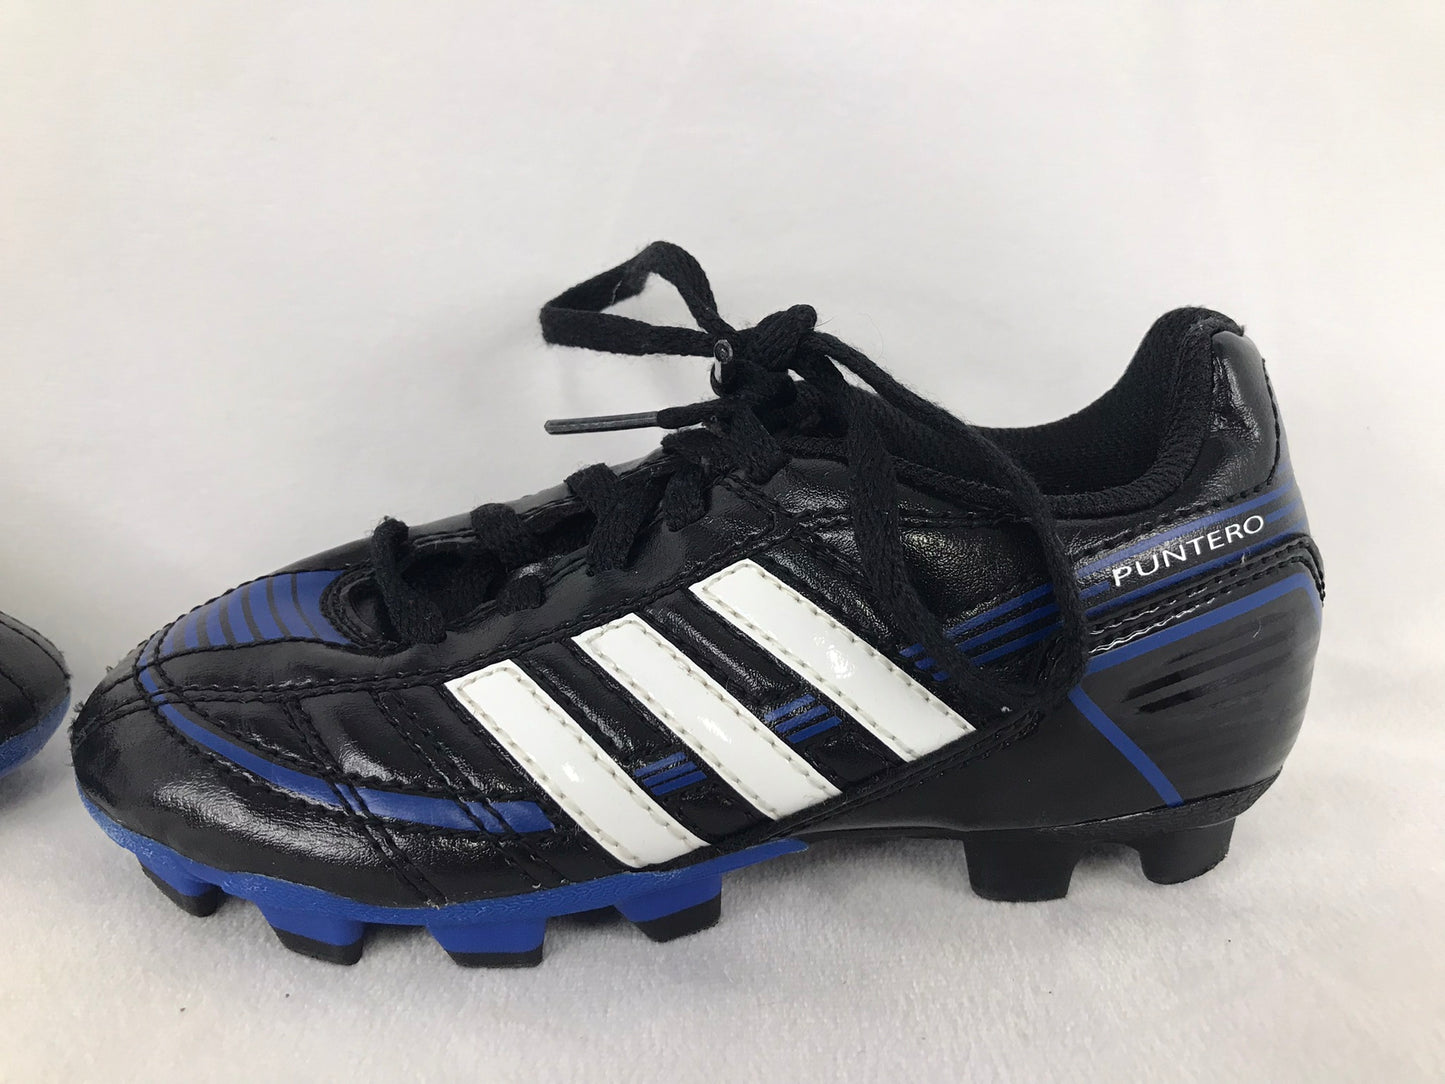 Soccer Shoes Cleats Child Size 11 Adidas Blue Black Excellent